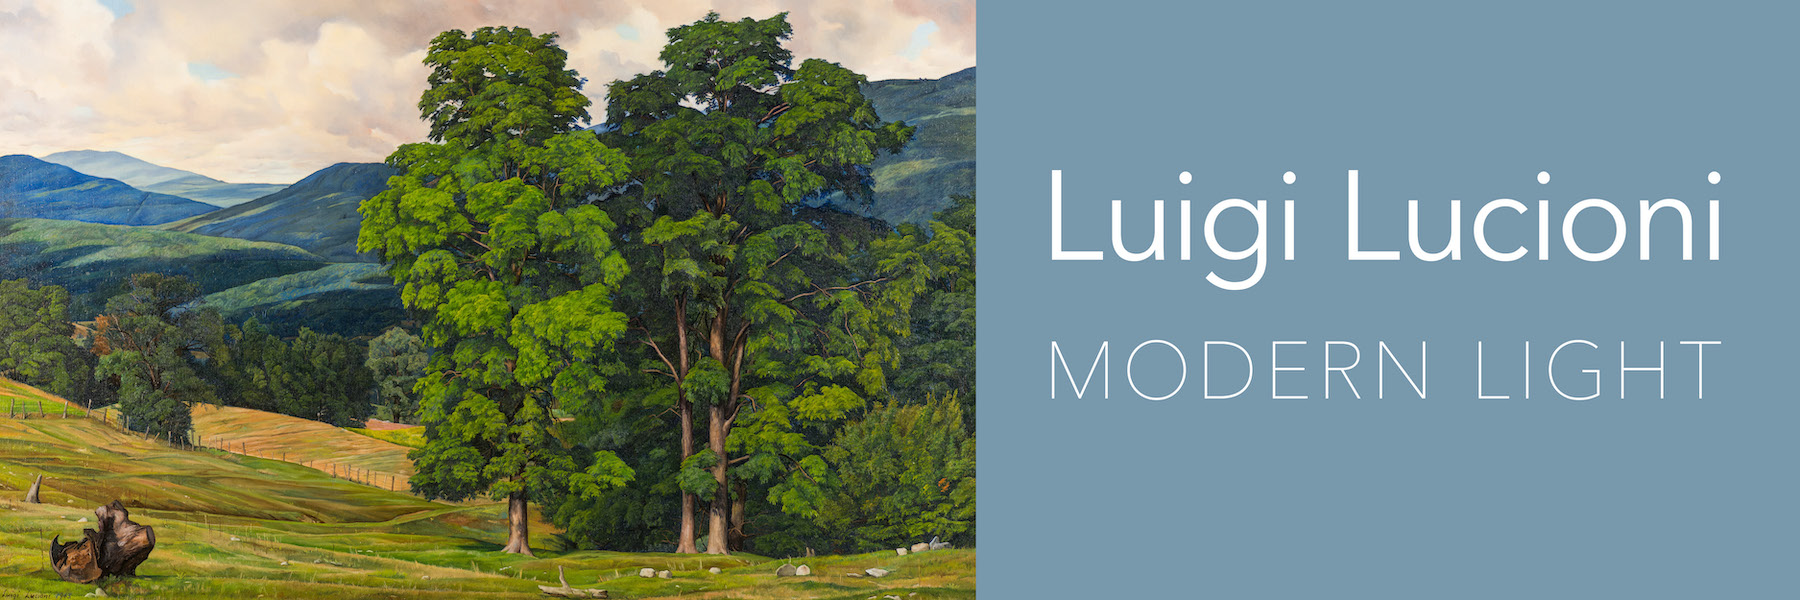 Online Exhibition "Luigi Lucioni: Modern Light"